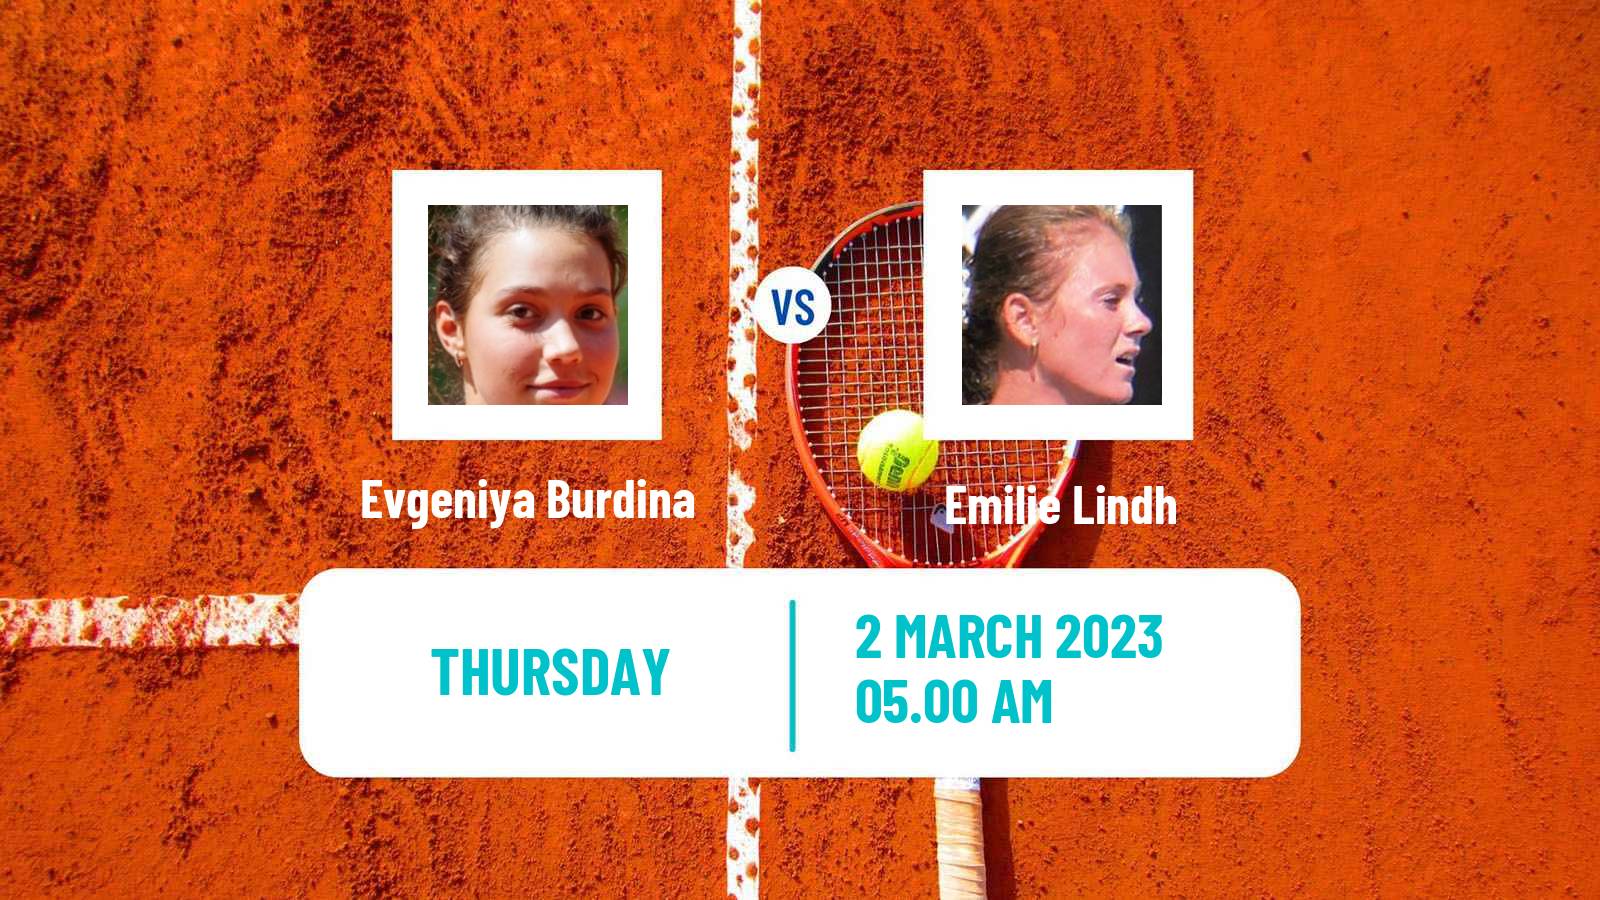 Tennis ITF Tournaments Evgeniya Burdina - Emilie Lindh